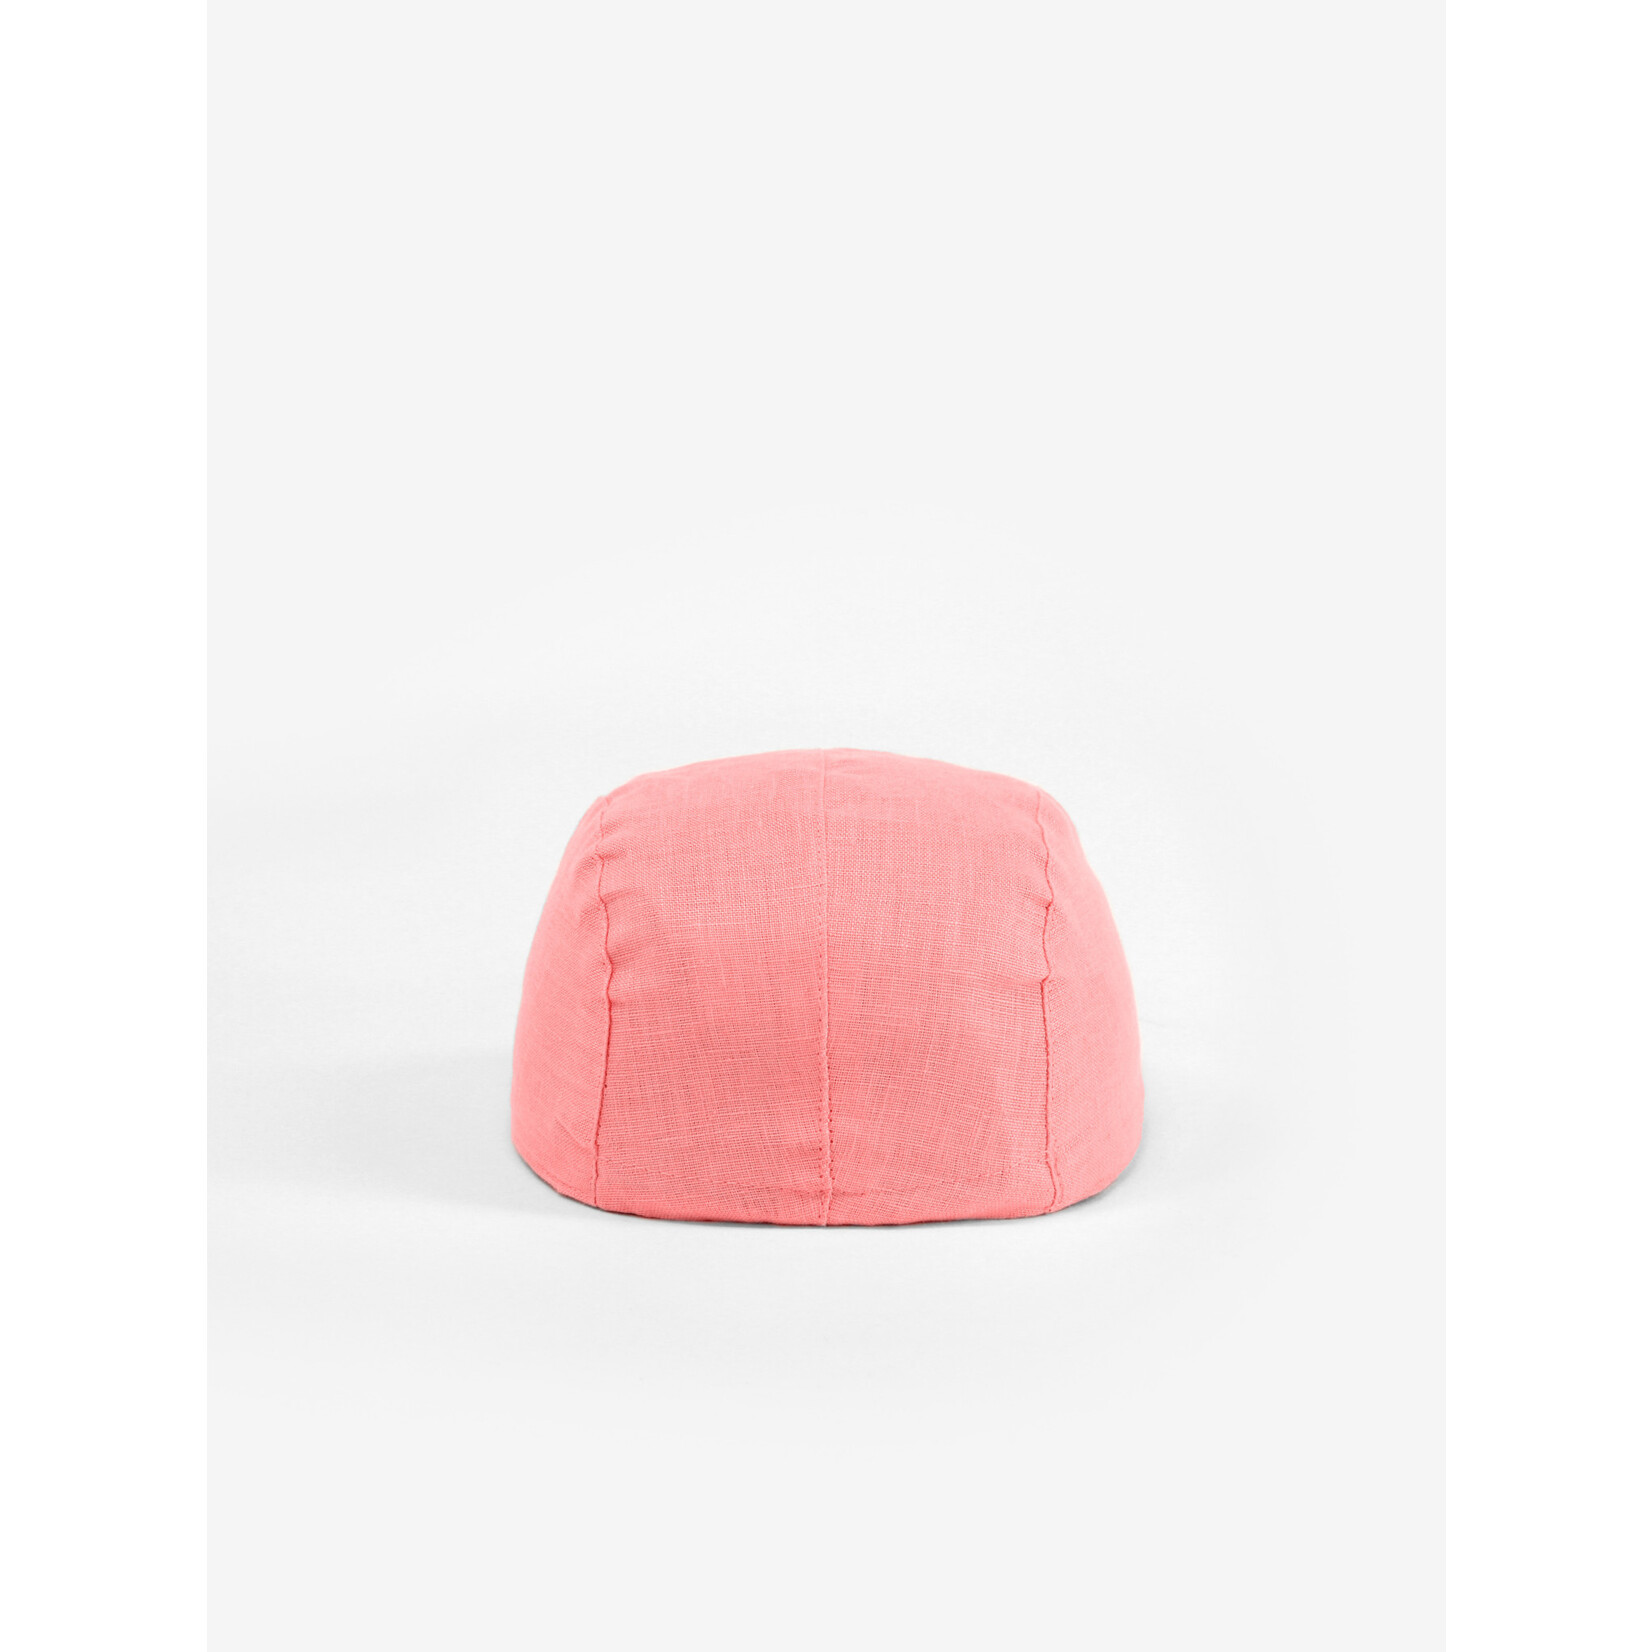 Caribou CARIBOU - Soft Linen Cap - Duo Pink